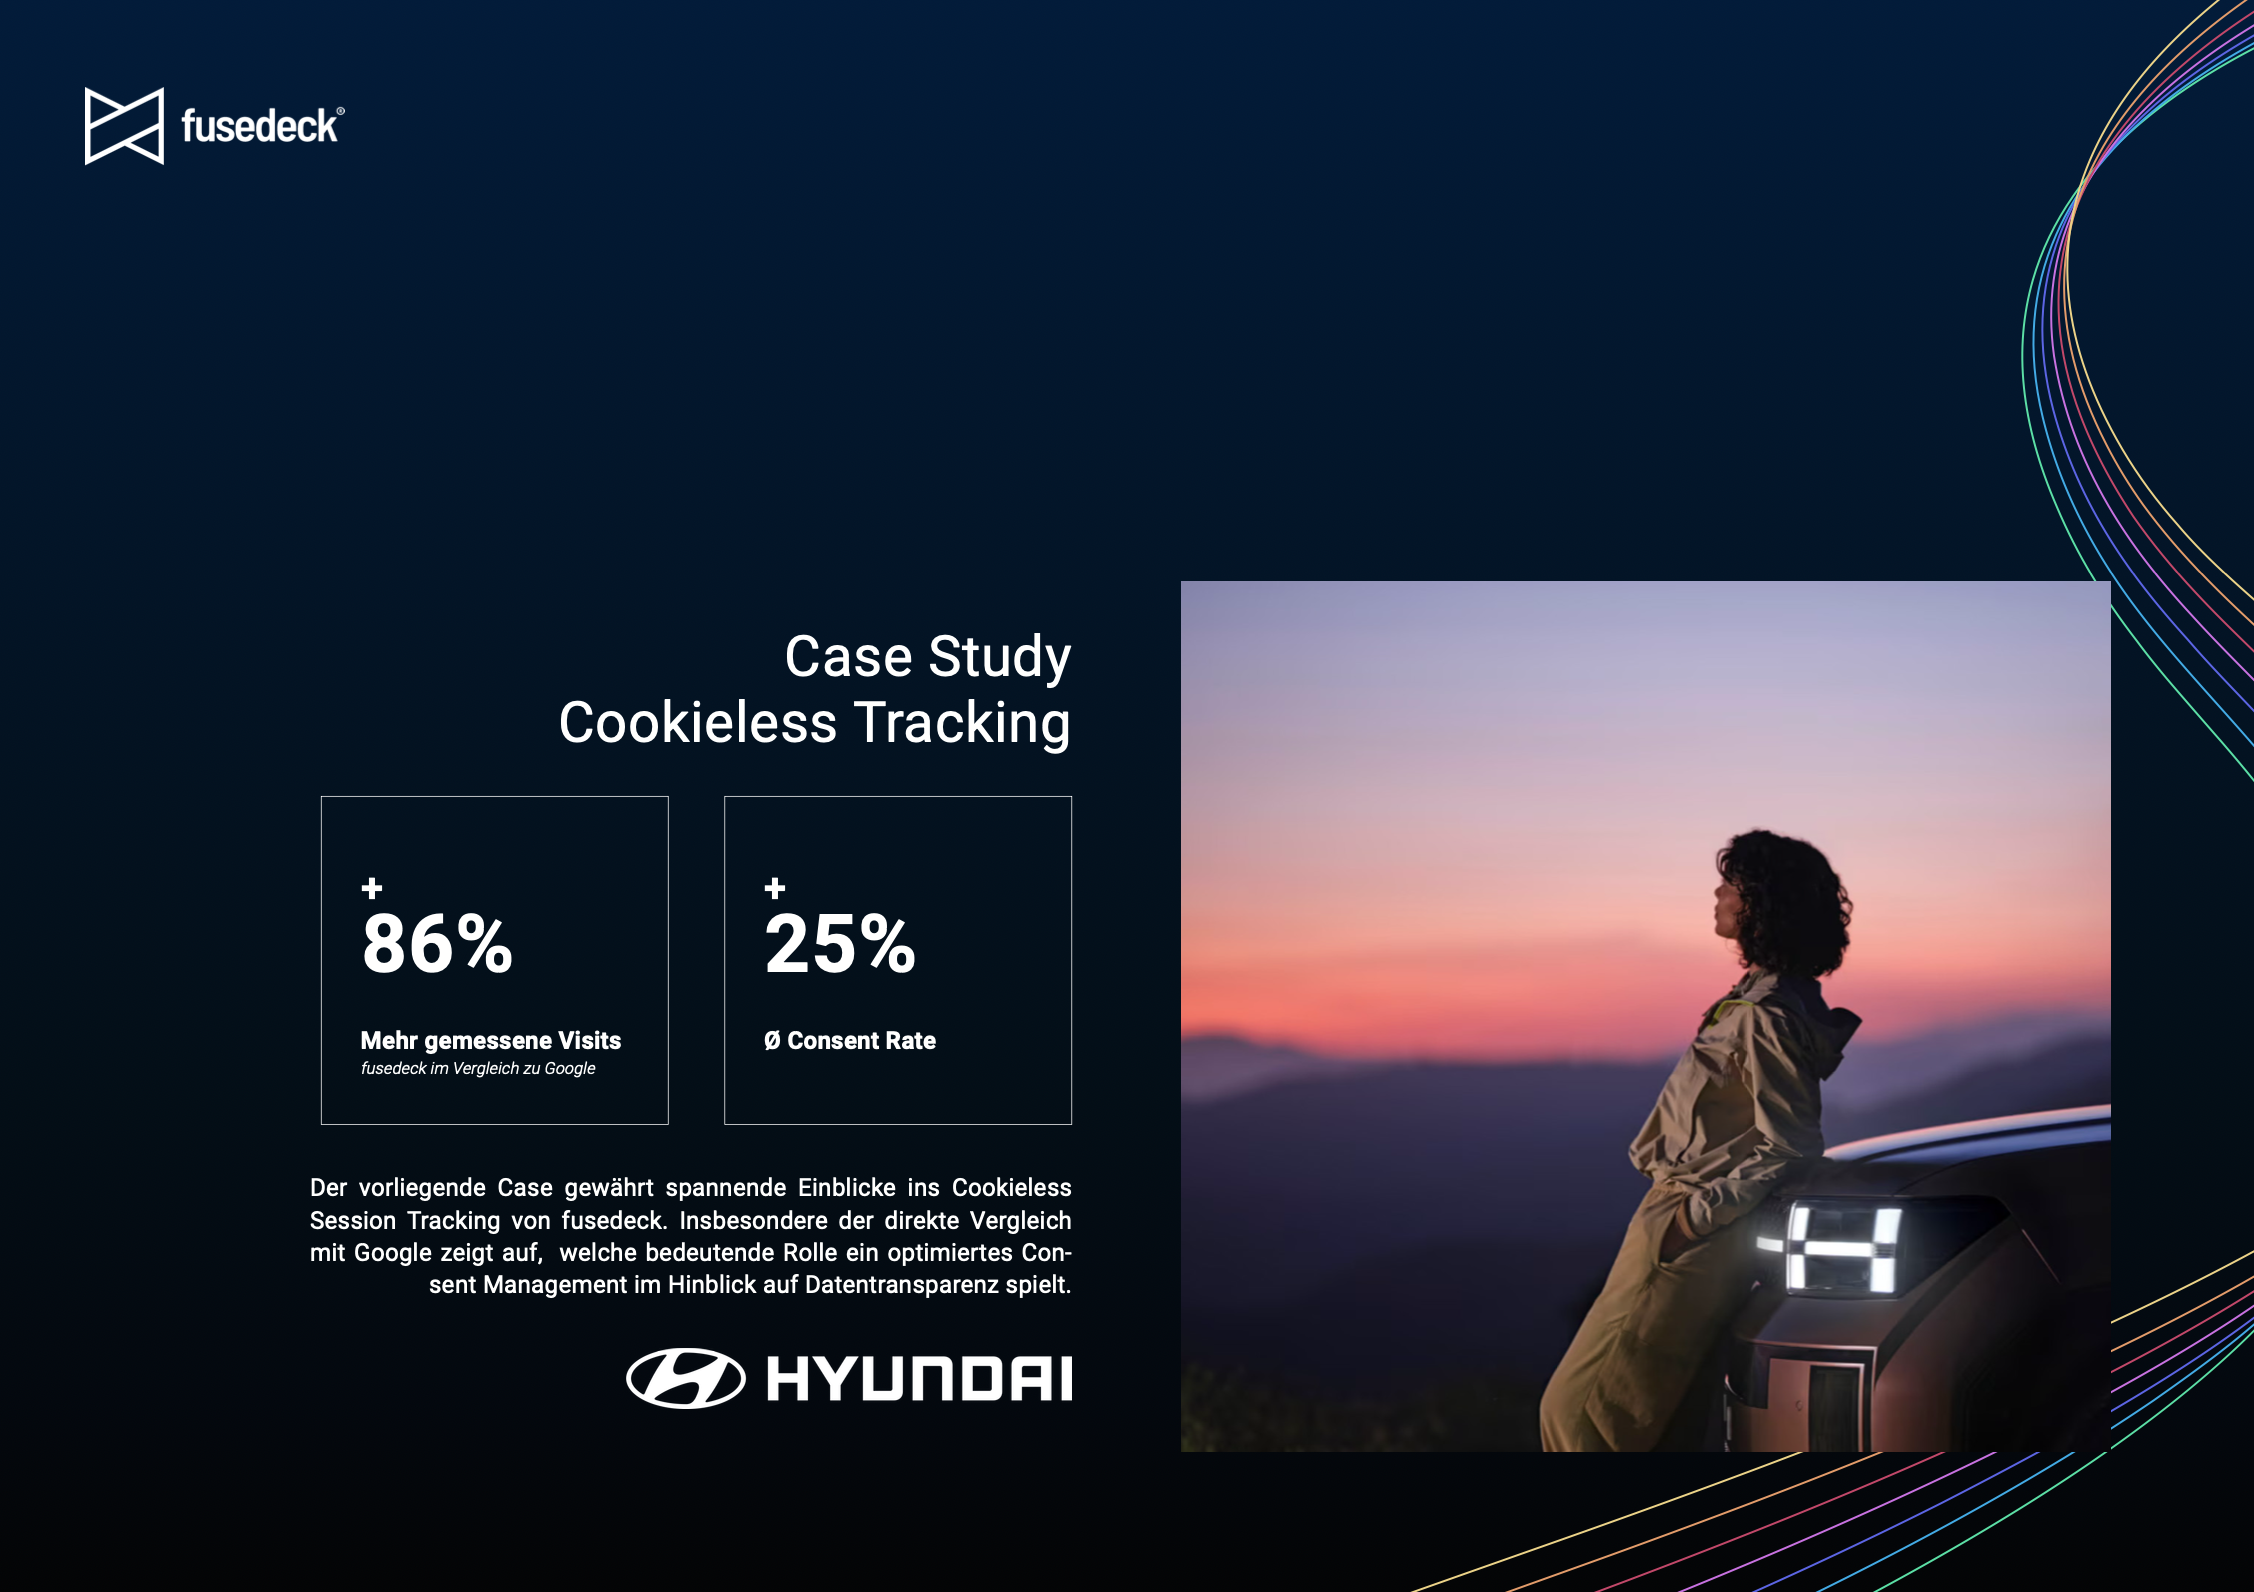 Case Study Hyundai Cookieless Session Tracking